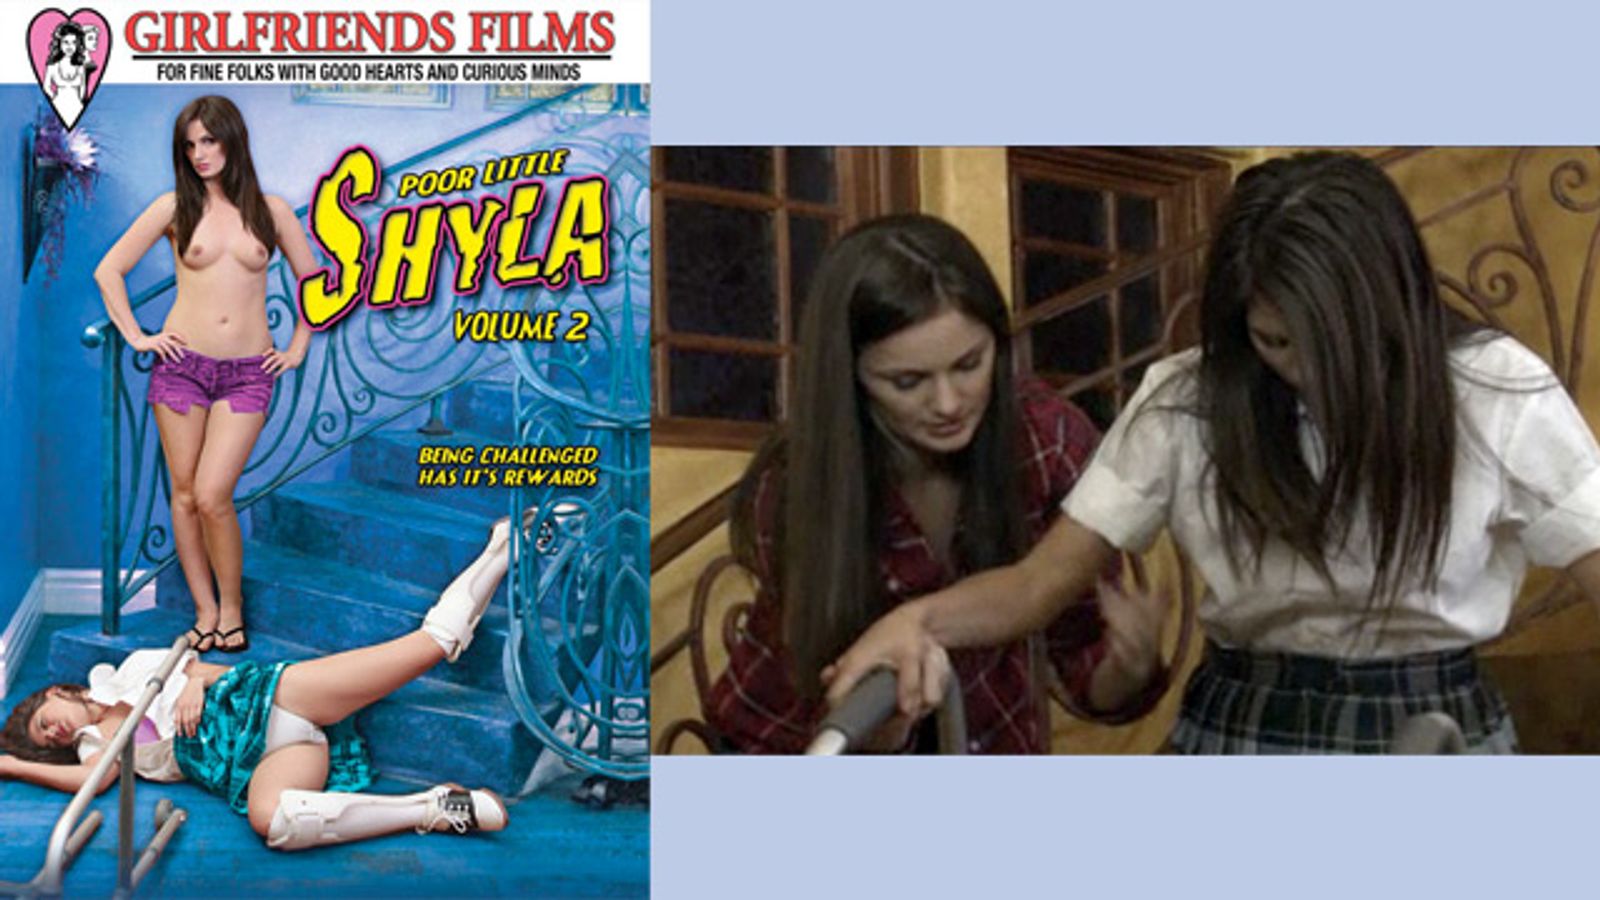 ‘Poor Little Shyla 2’ At Last on DVD From Girlfriends Films